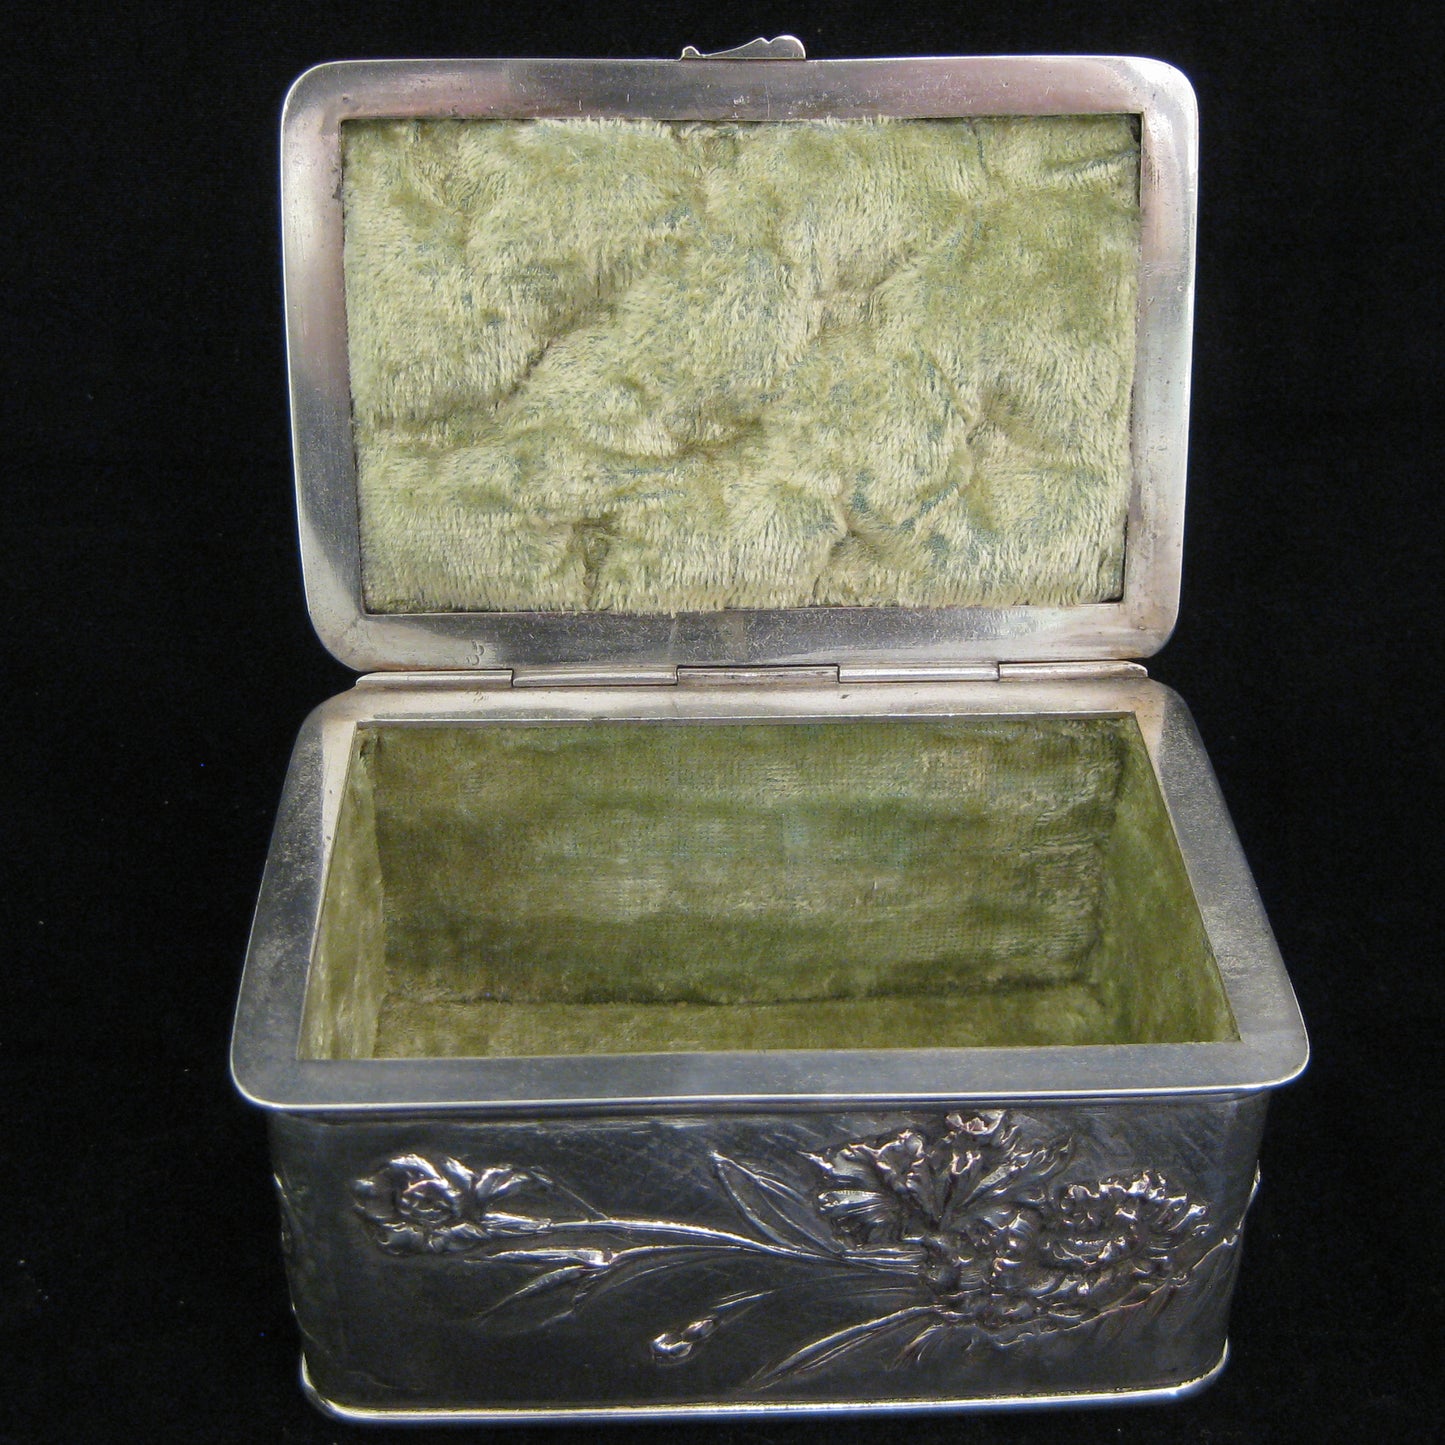 An art Nouveau Electrotype jewelry box